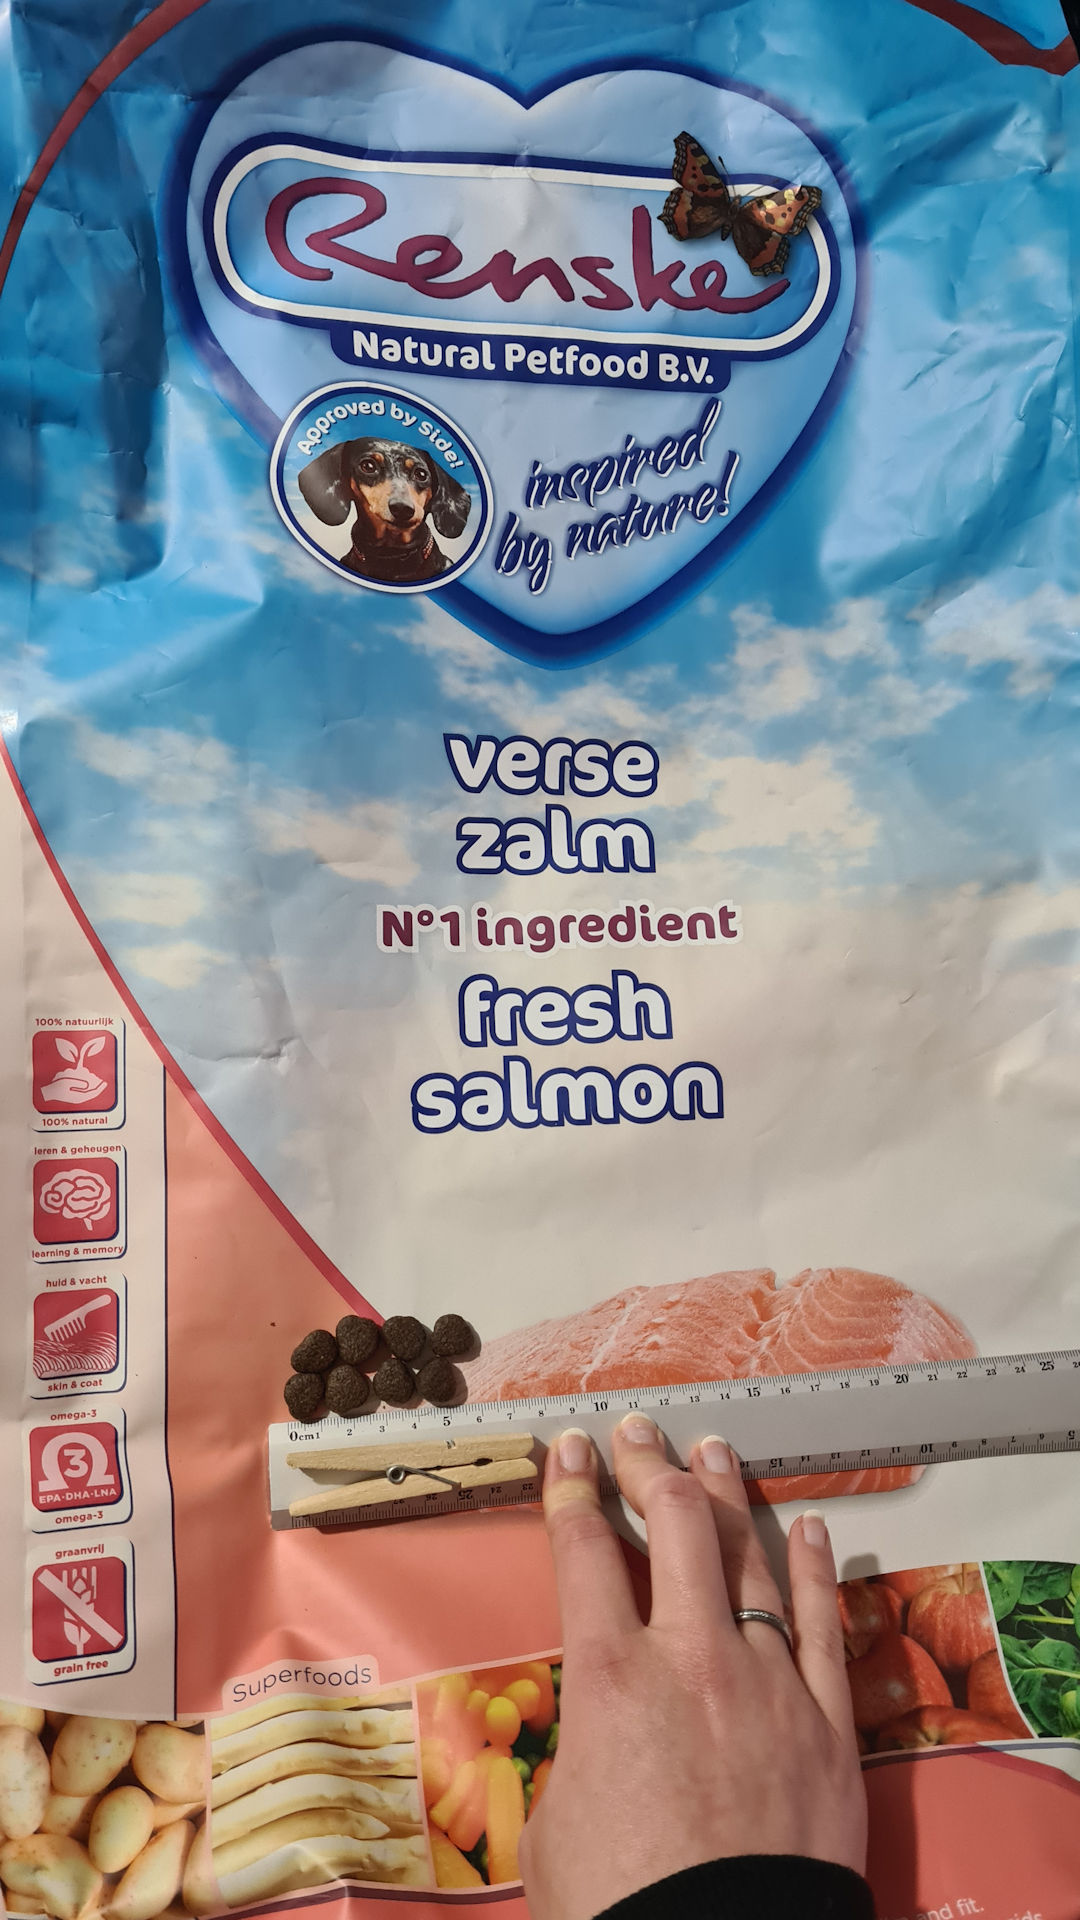 Brokken – Renske Super Premium verse zalm / fresh salmon